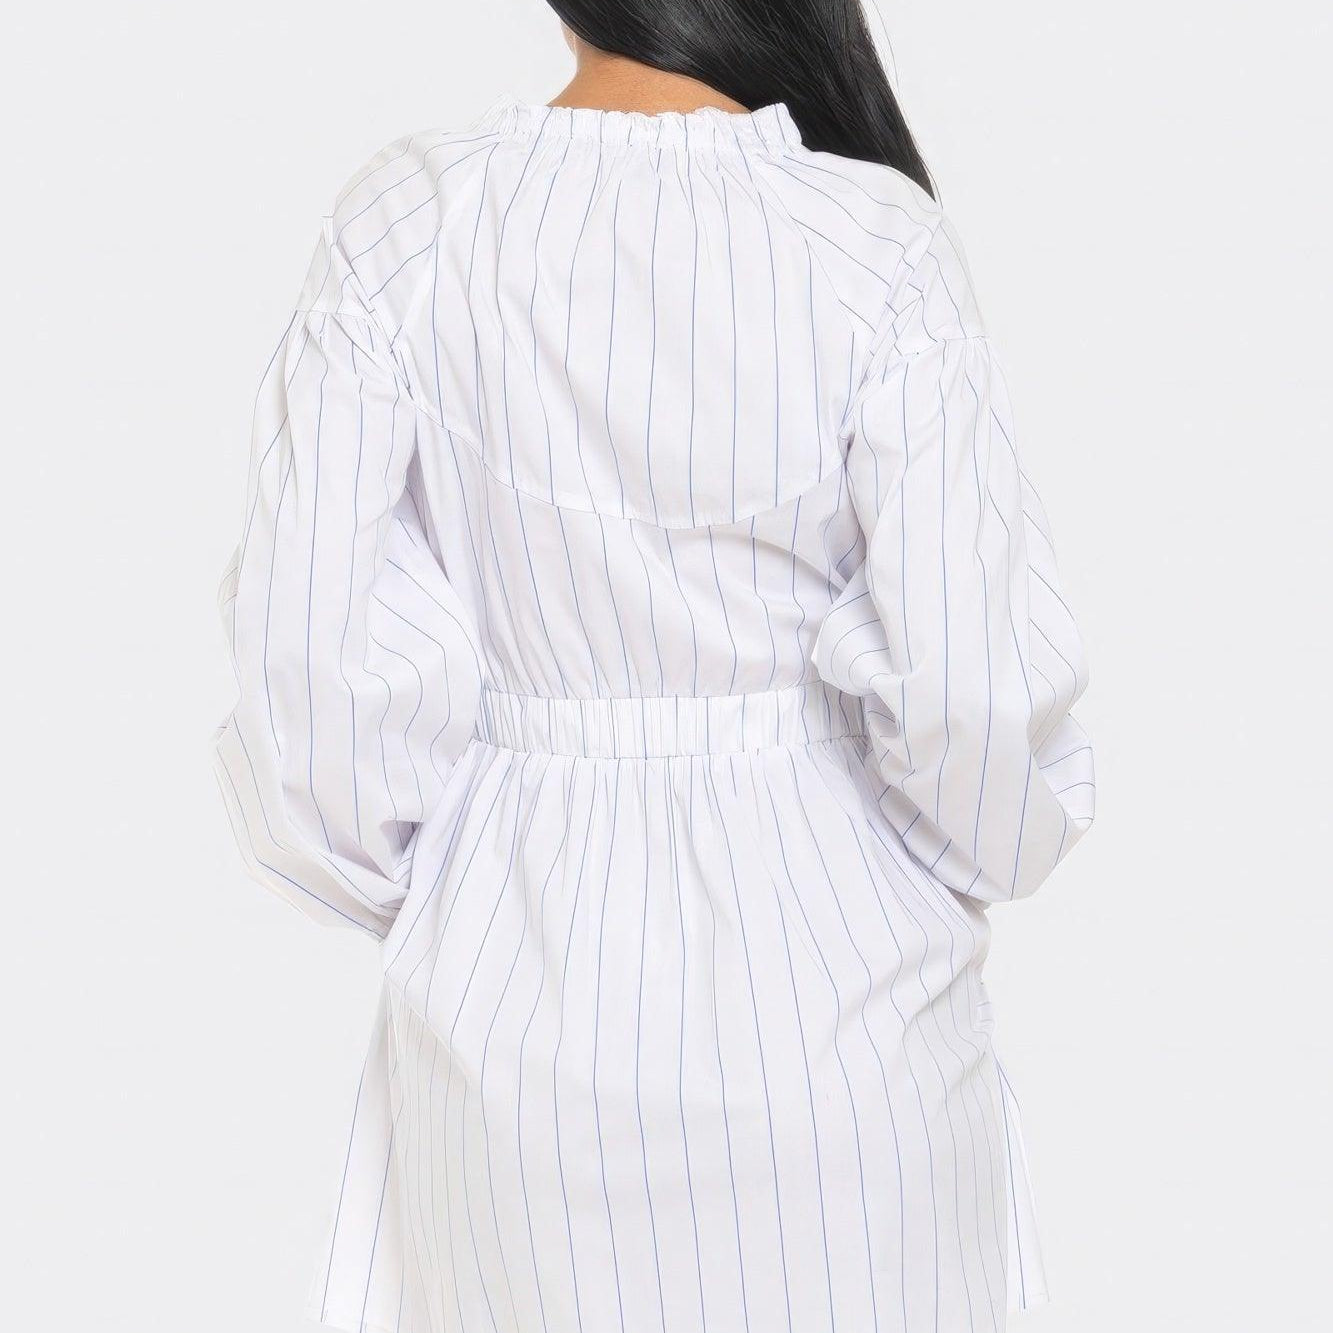 Women's Dresses Women's White Striped Mini Dress with Pockets